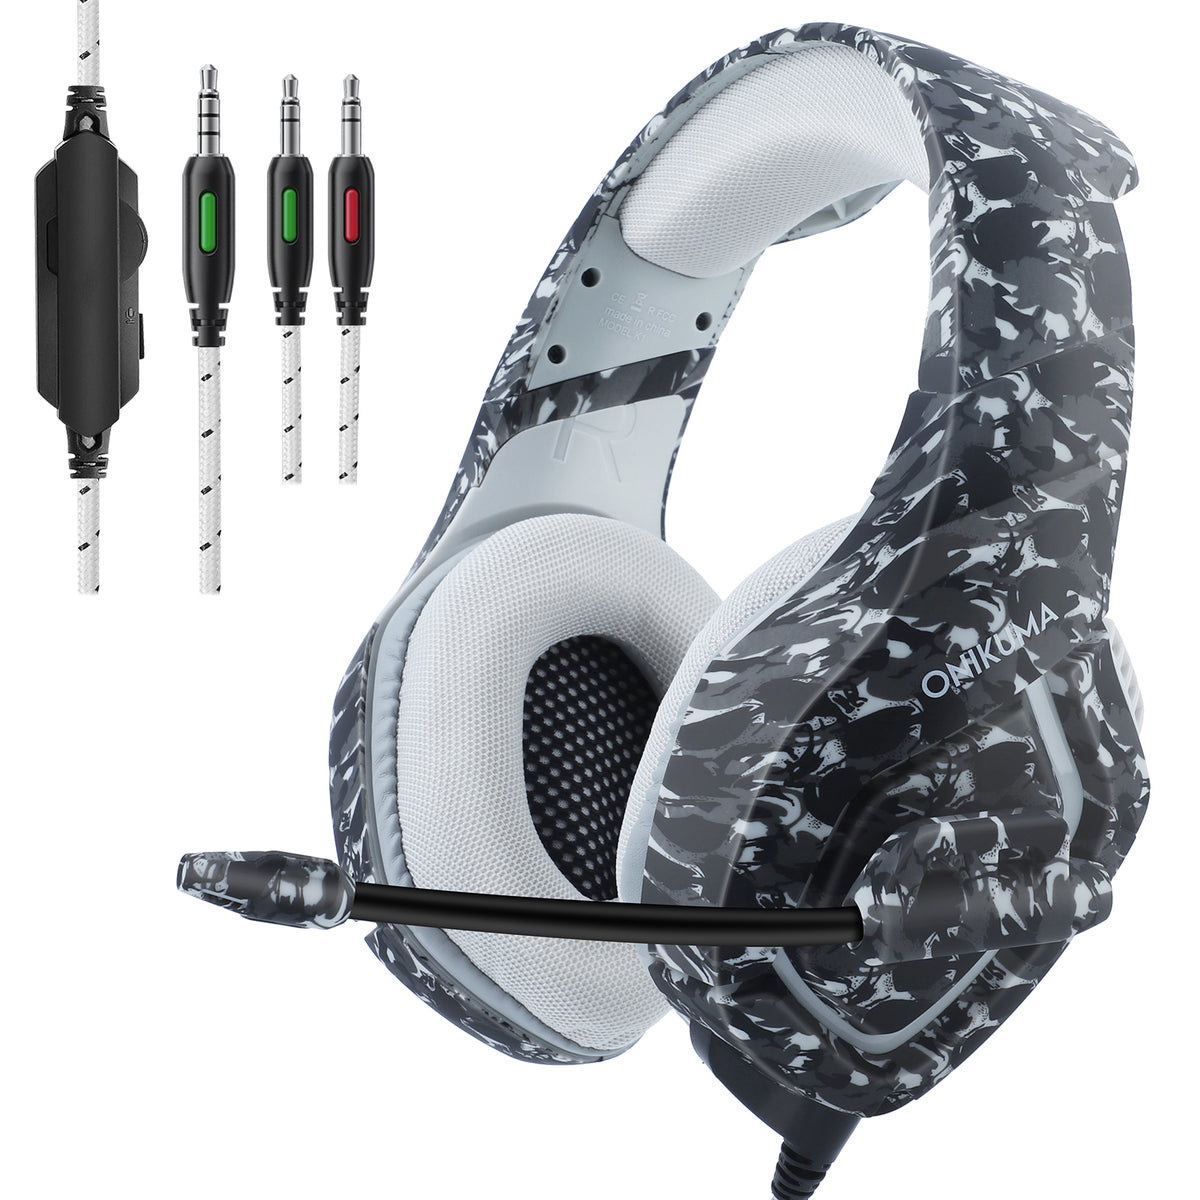 Charmant beschermen Mijlpaal ONIKUMA K1-B Camouflage Elite stereo gaming headset for PS4, Xbox, PC –  Onikuma Gaming